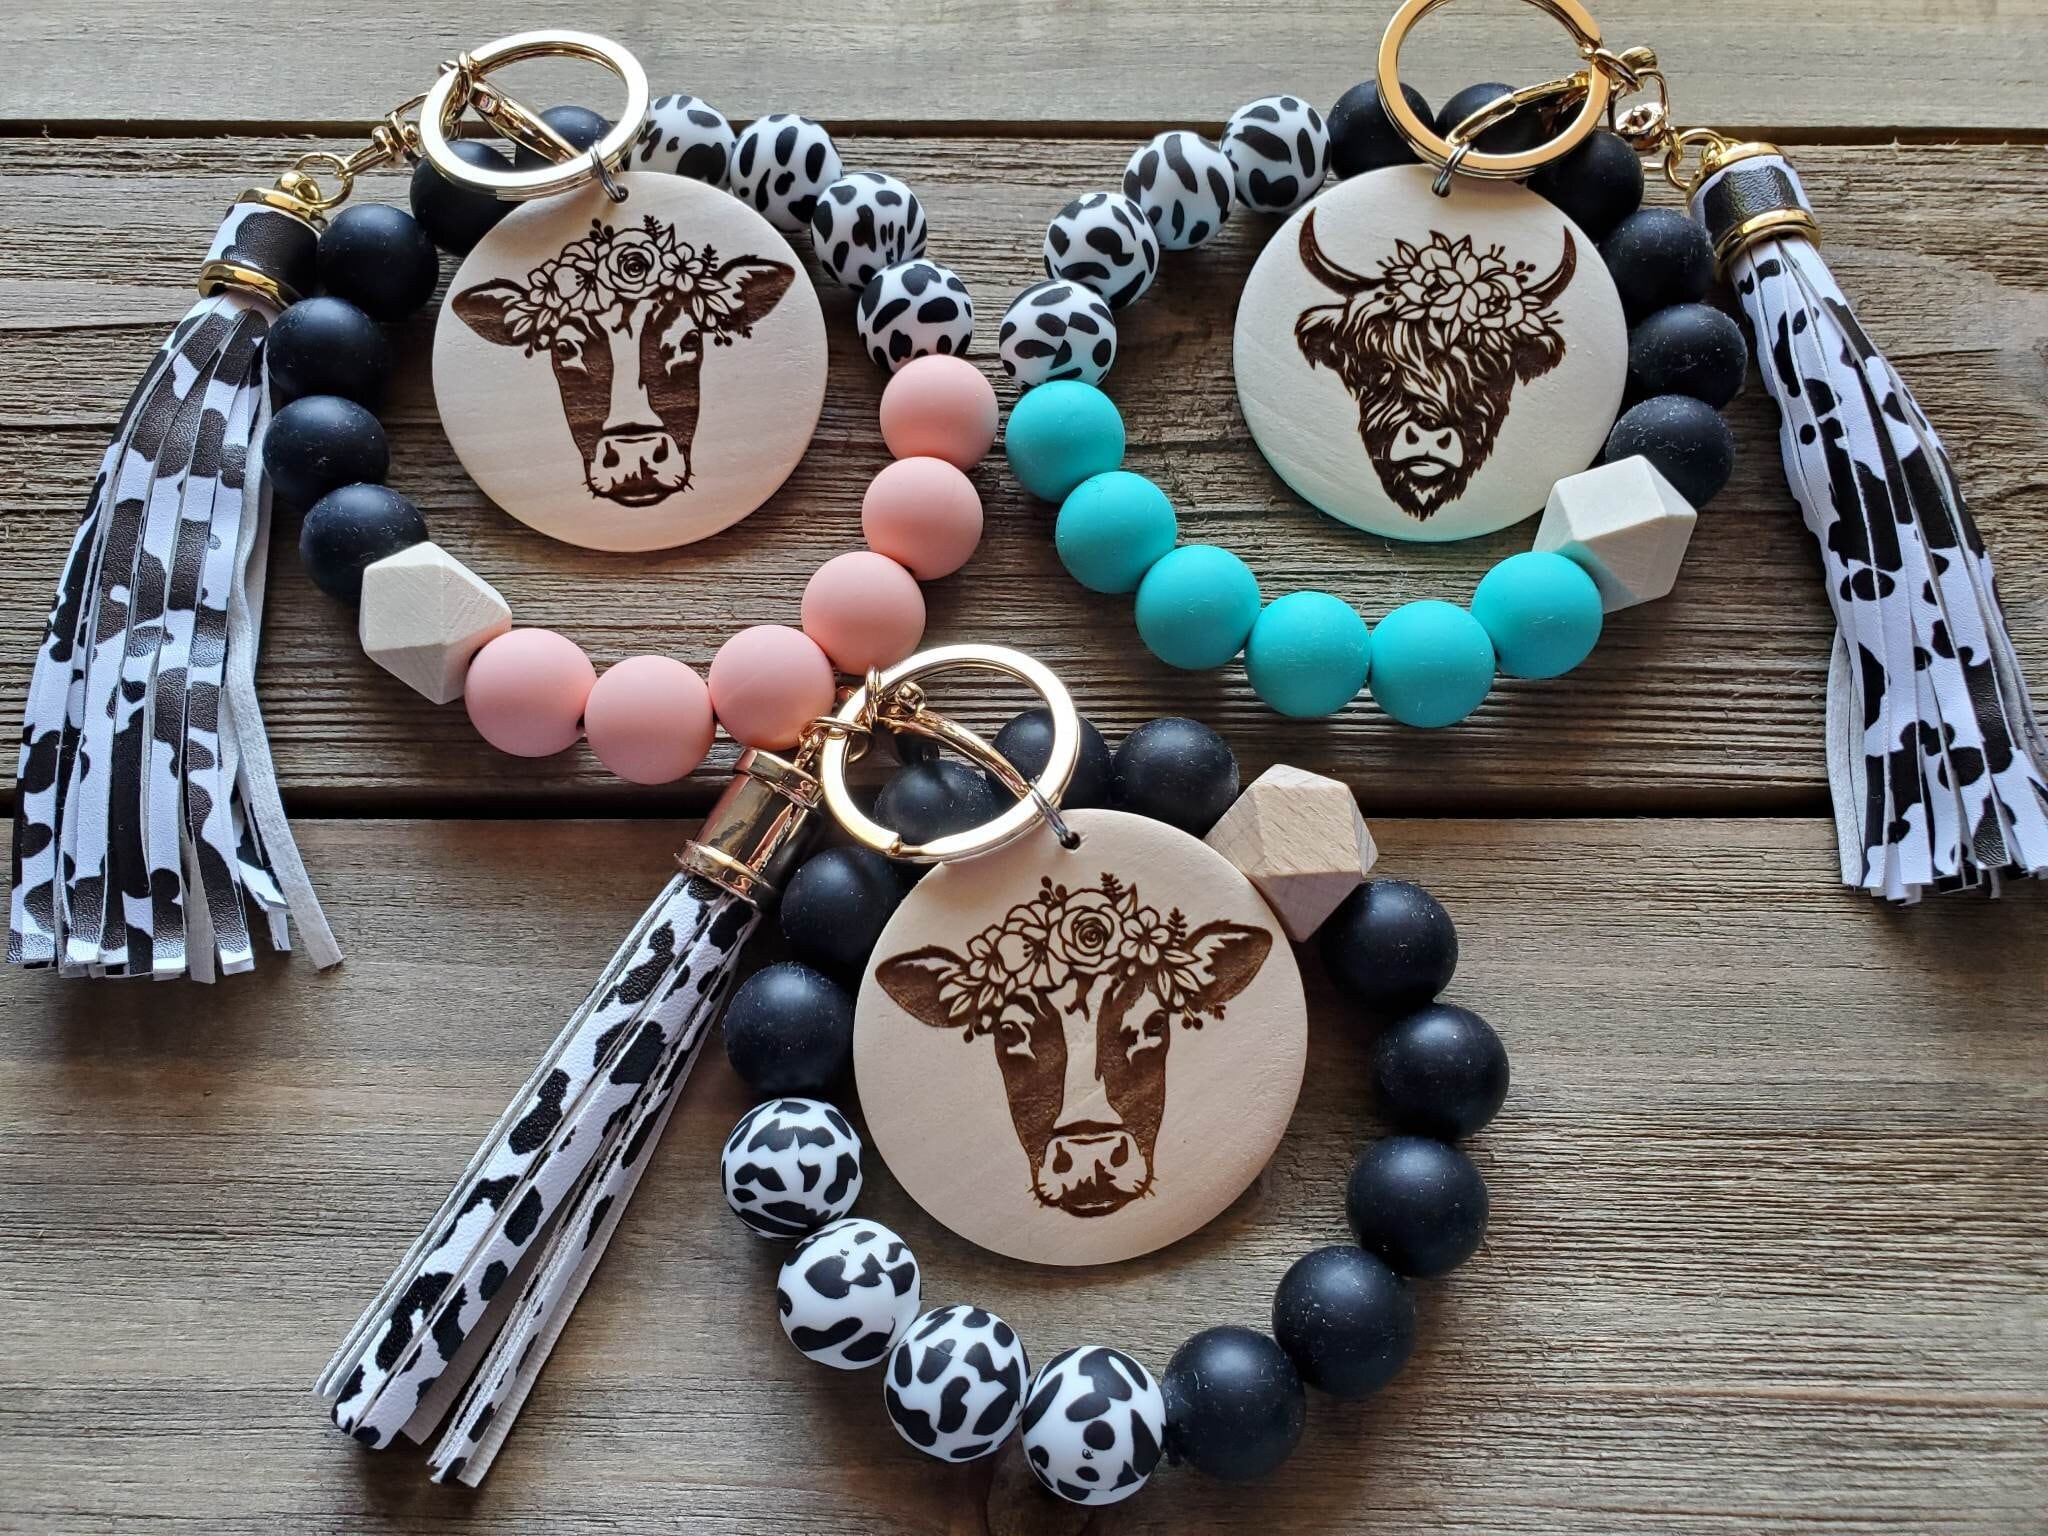 Lemua Highland Cow Wristlet Keychain Highland Cow Gifts for Women Girls